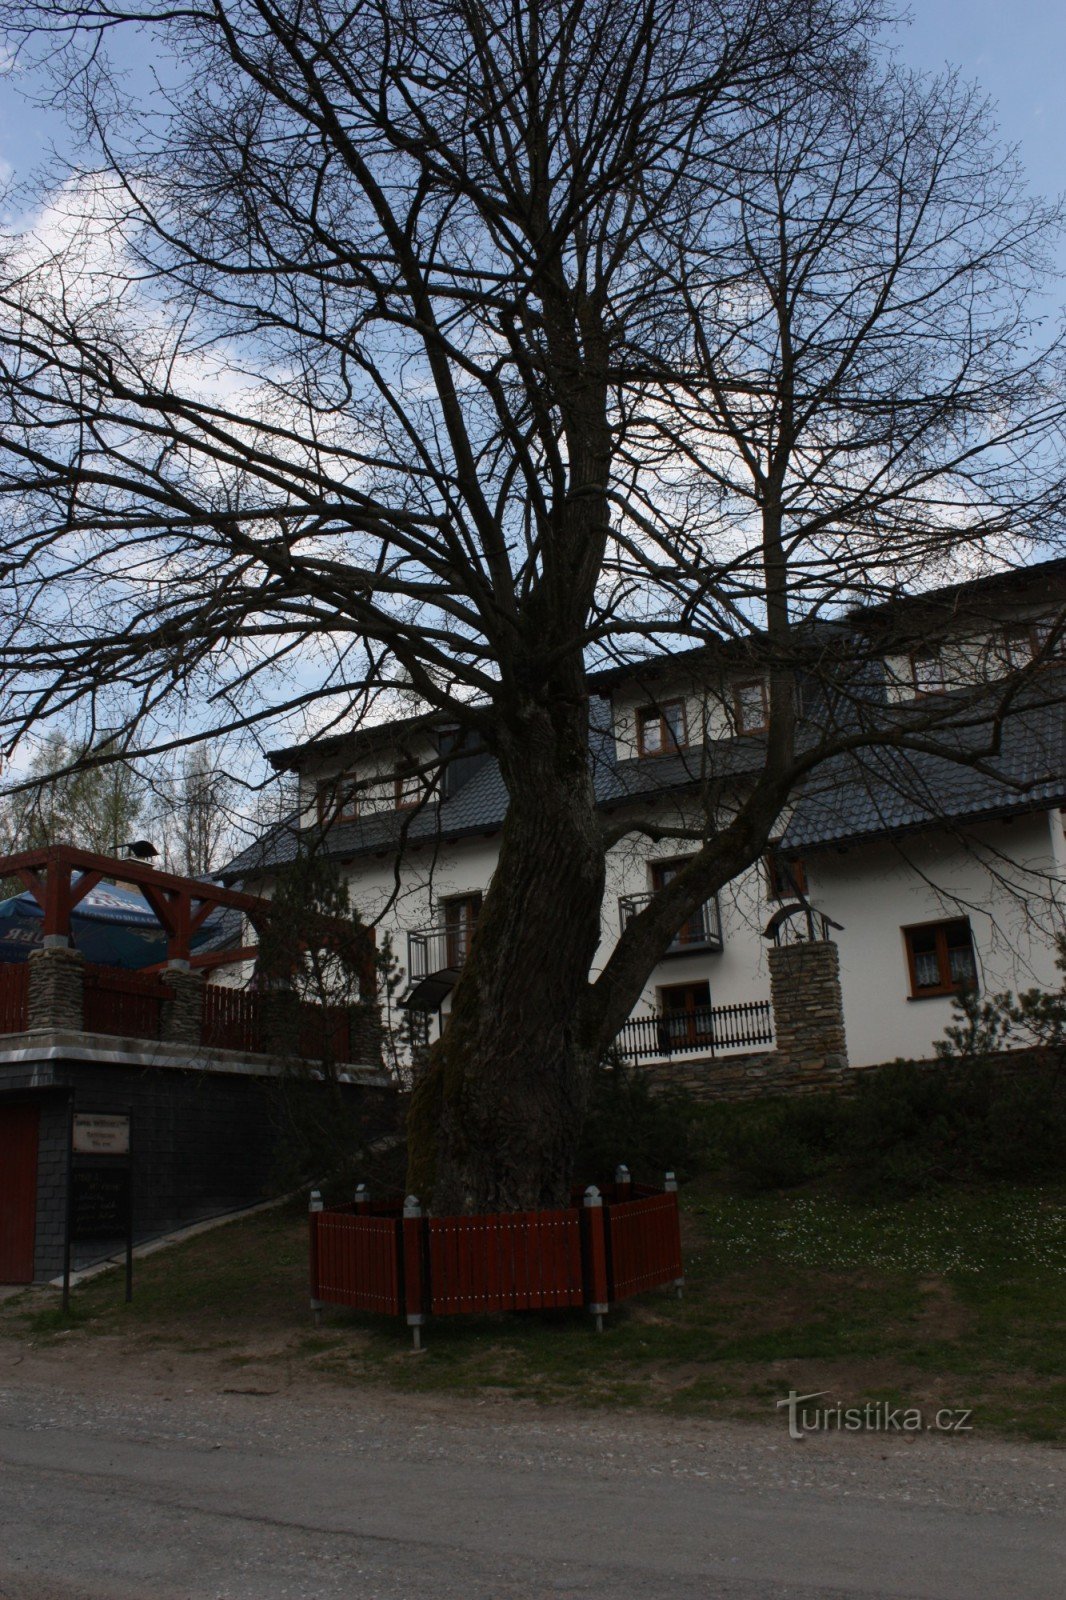 Hynčice pod Sušinou κέντρο δραστηριοτήτων σκι και ποδηλασίας